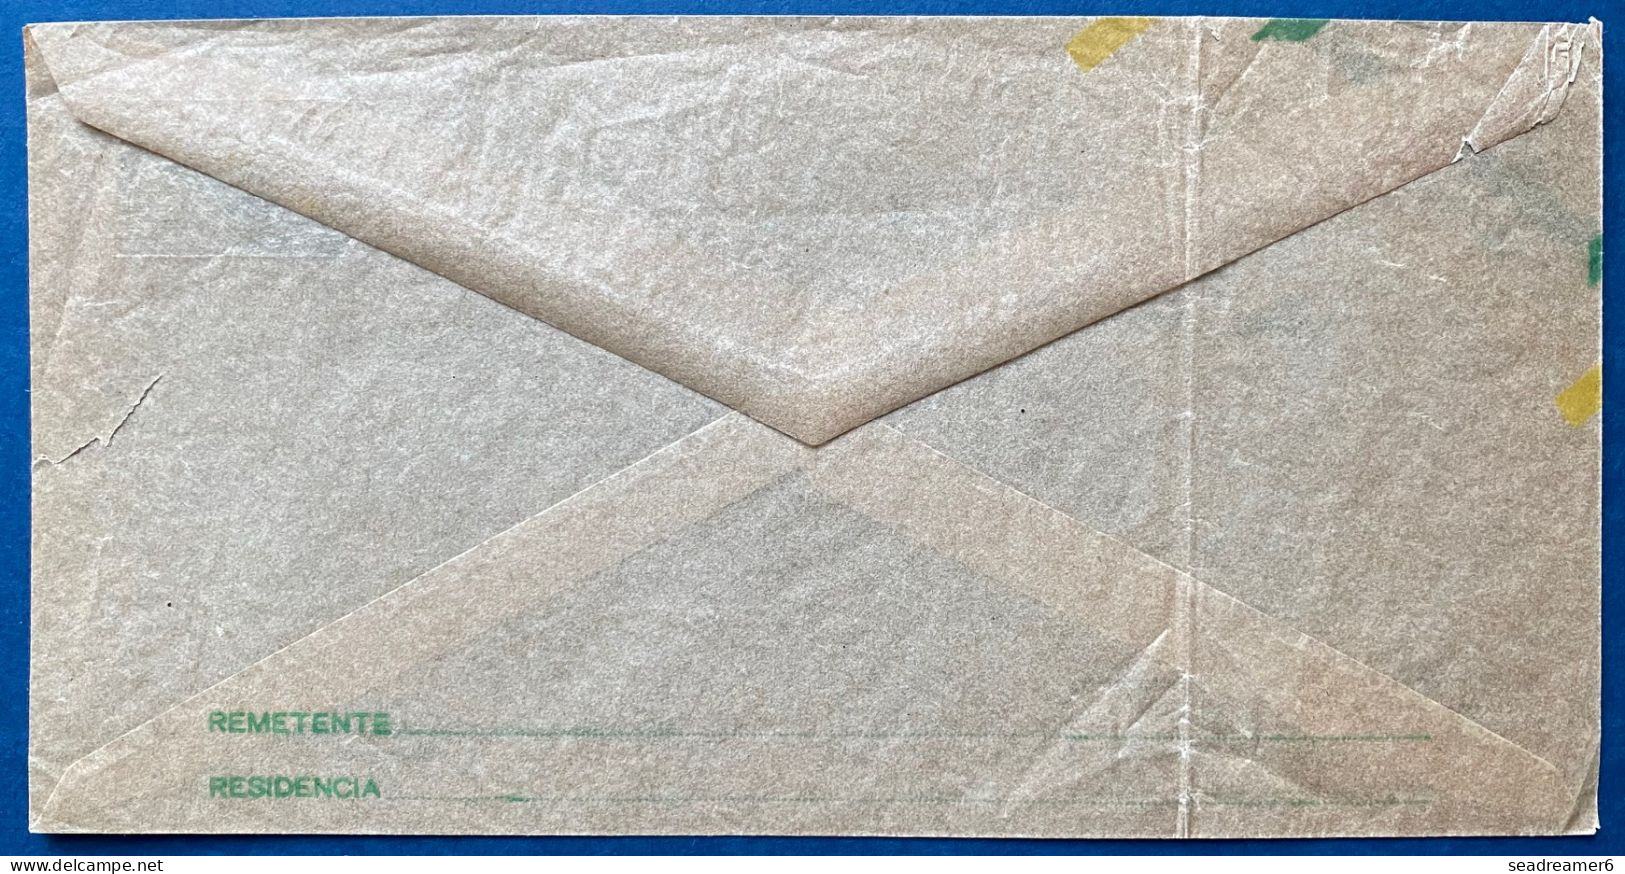 Brazil 1941 Registred Stationnery Letter Glassine Paper Of 2$000 Unused Translucent For Seing What Was Inside TTB - Airmail